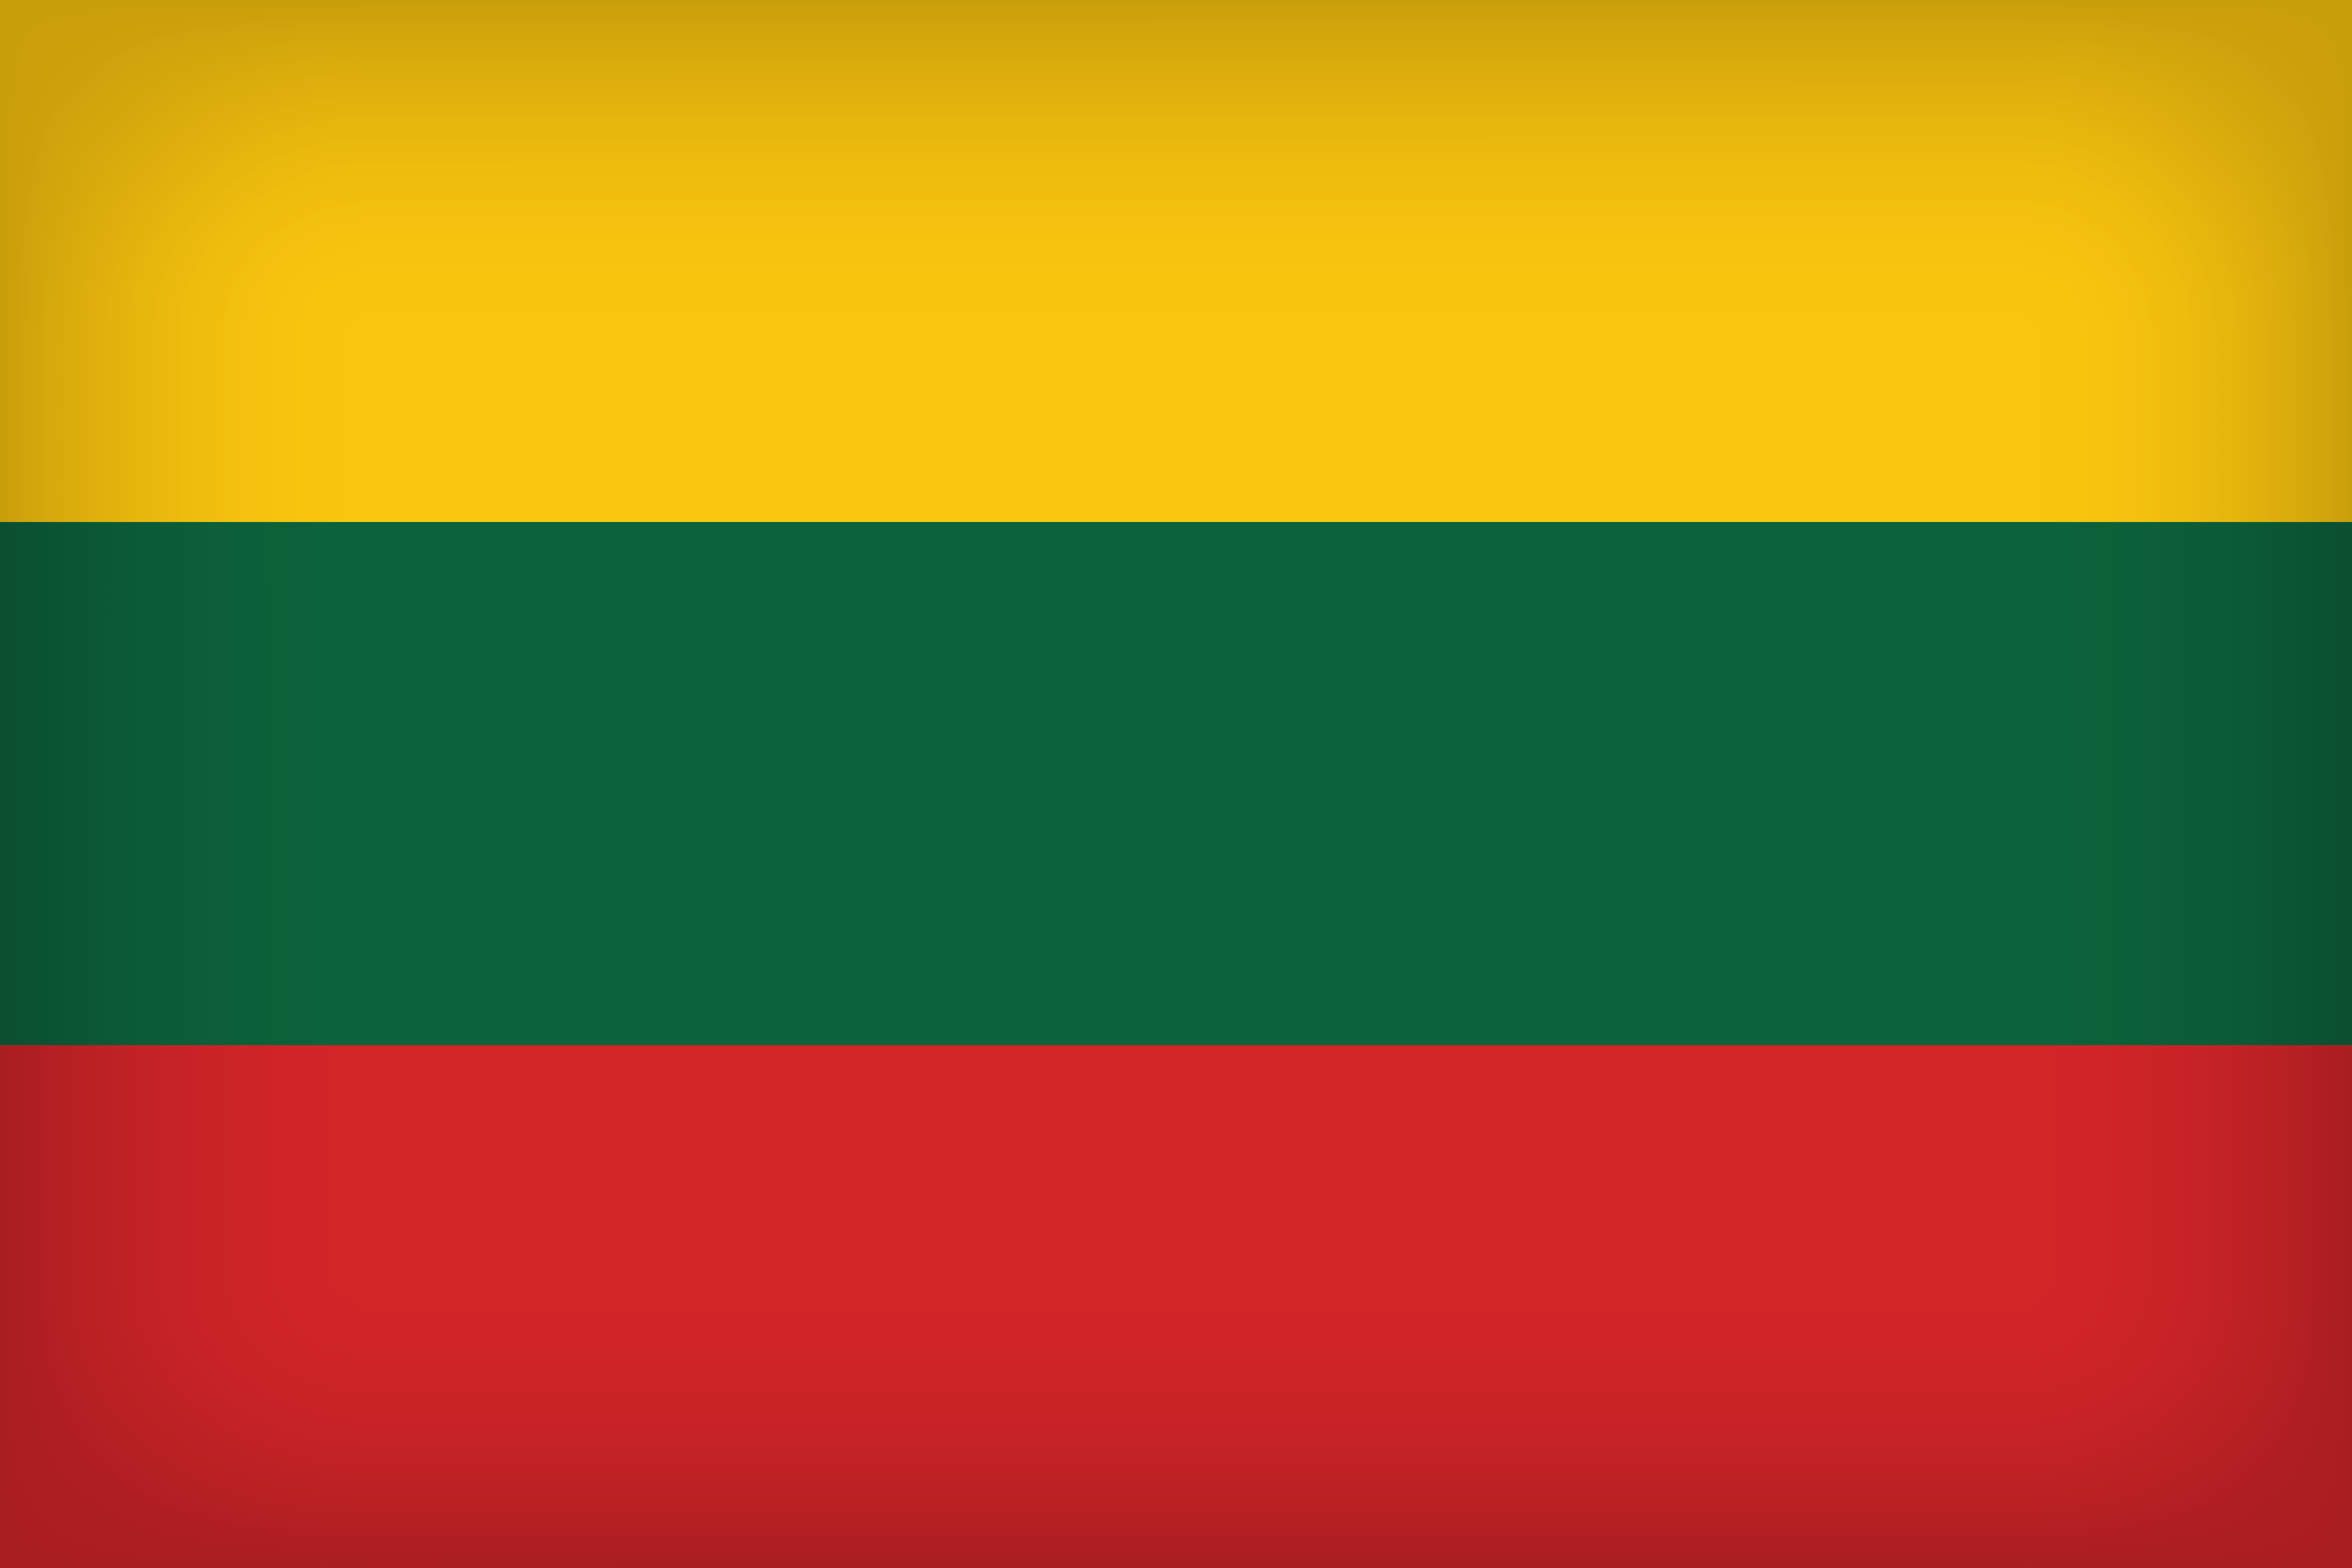 Lithuania Large Flag Quality Image